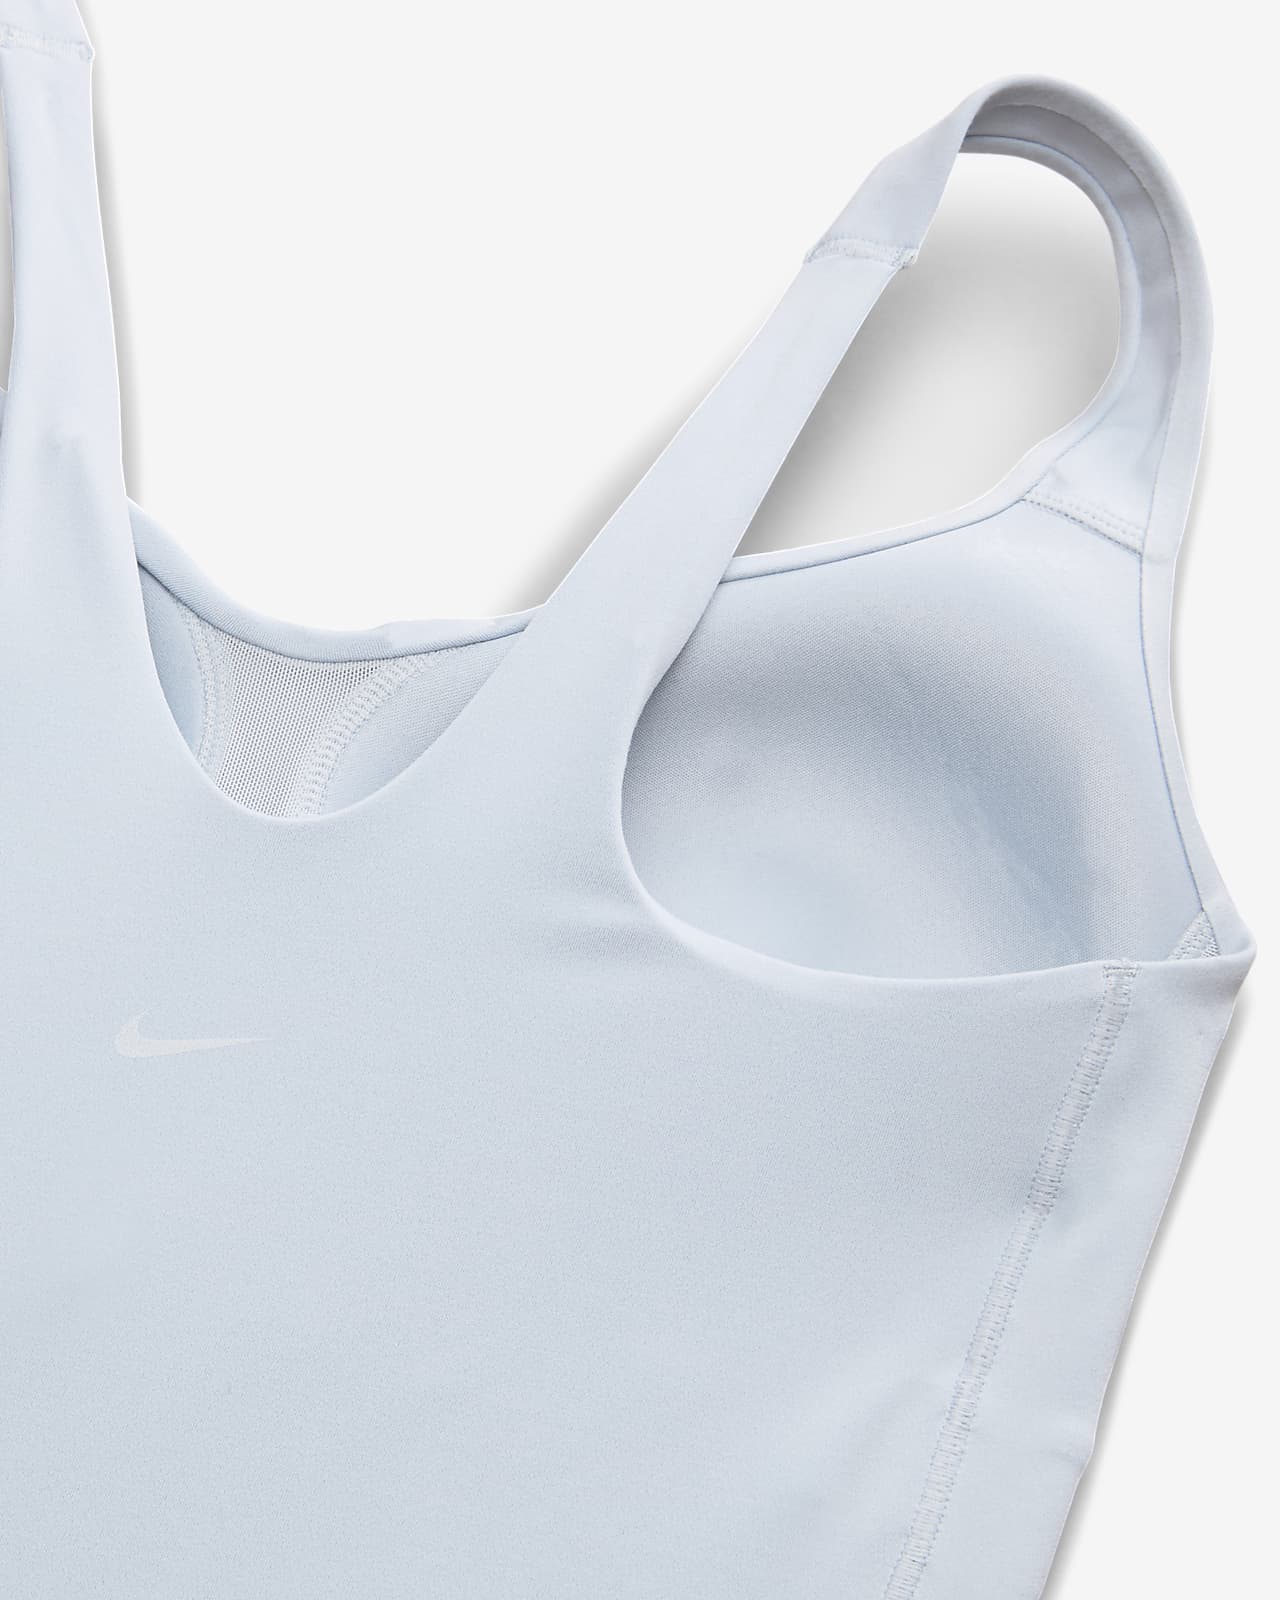 Nike Alate Women's Medium-Support Padded Sports Bra Tank Top